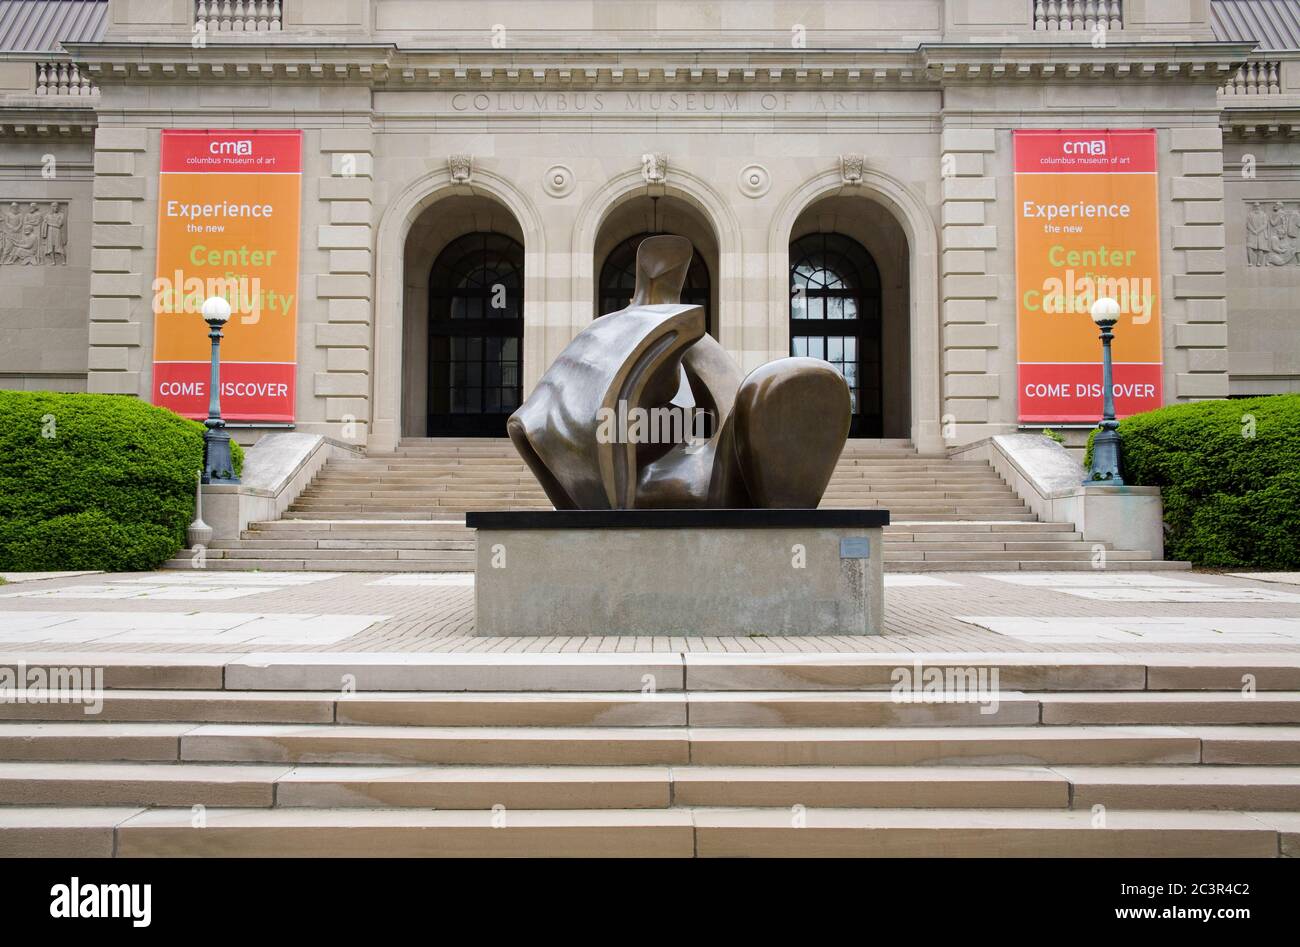 Museum of Art,Columbus,Ohio,USA Stock Photo